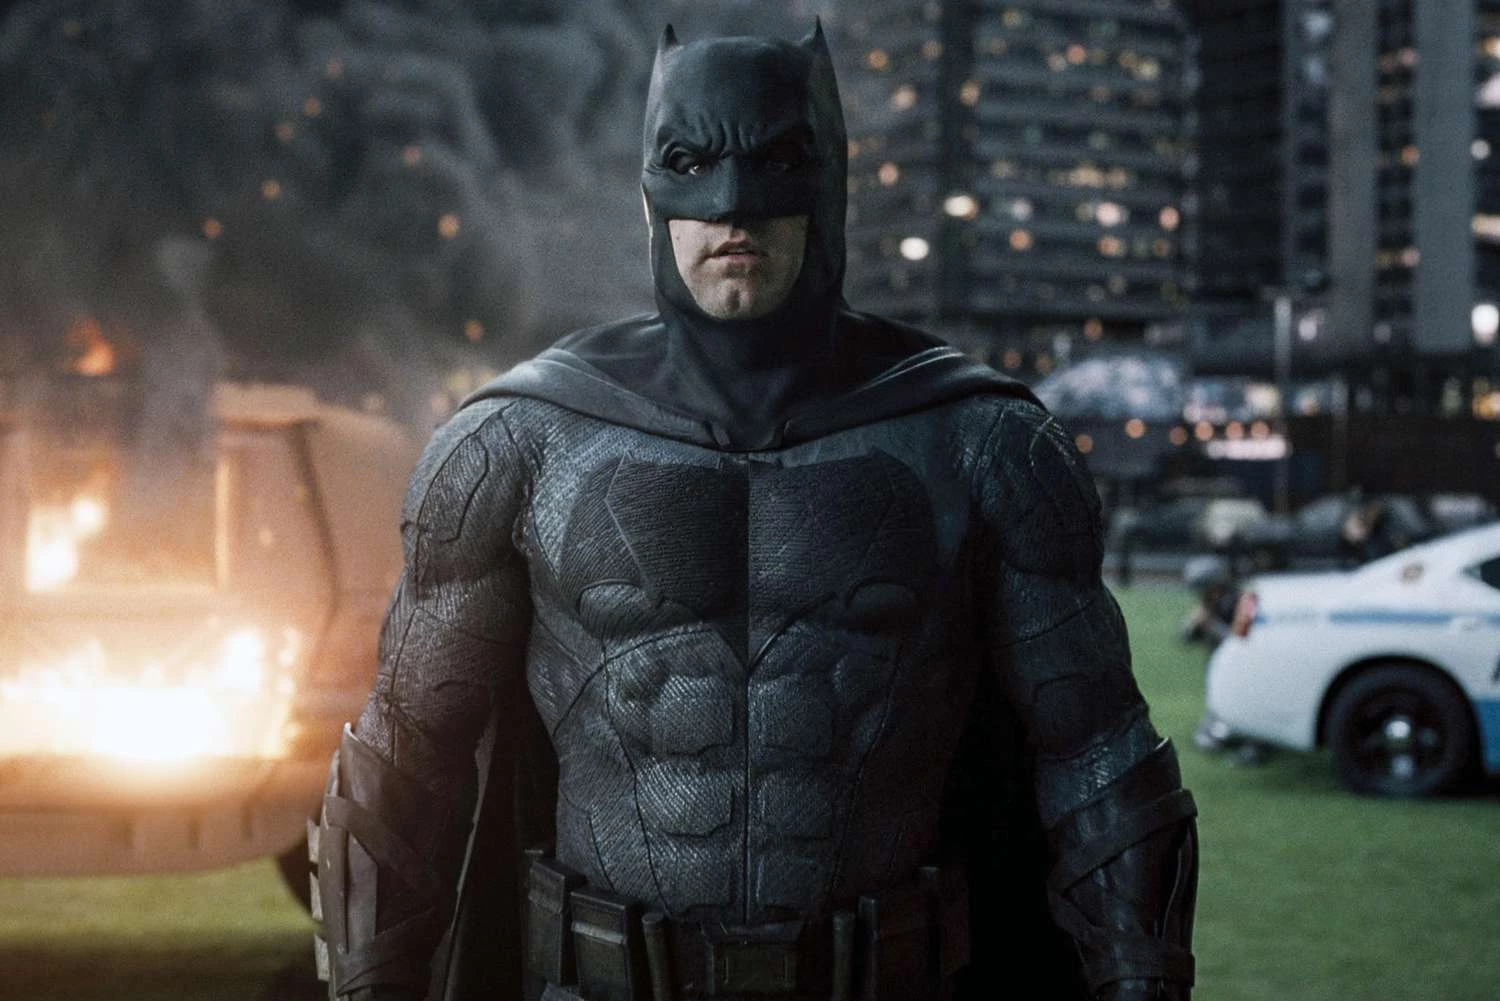 Ben Affleck As Bruce Wayne/Batman